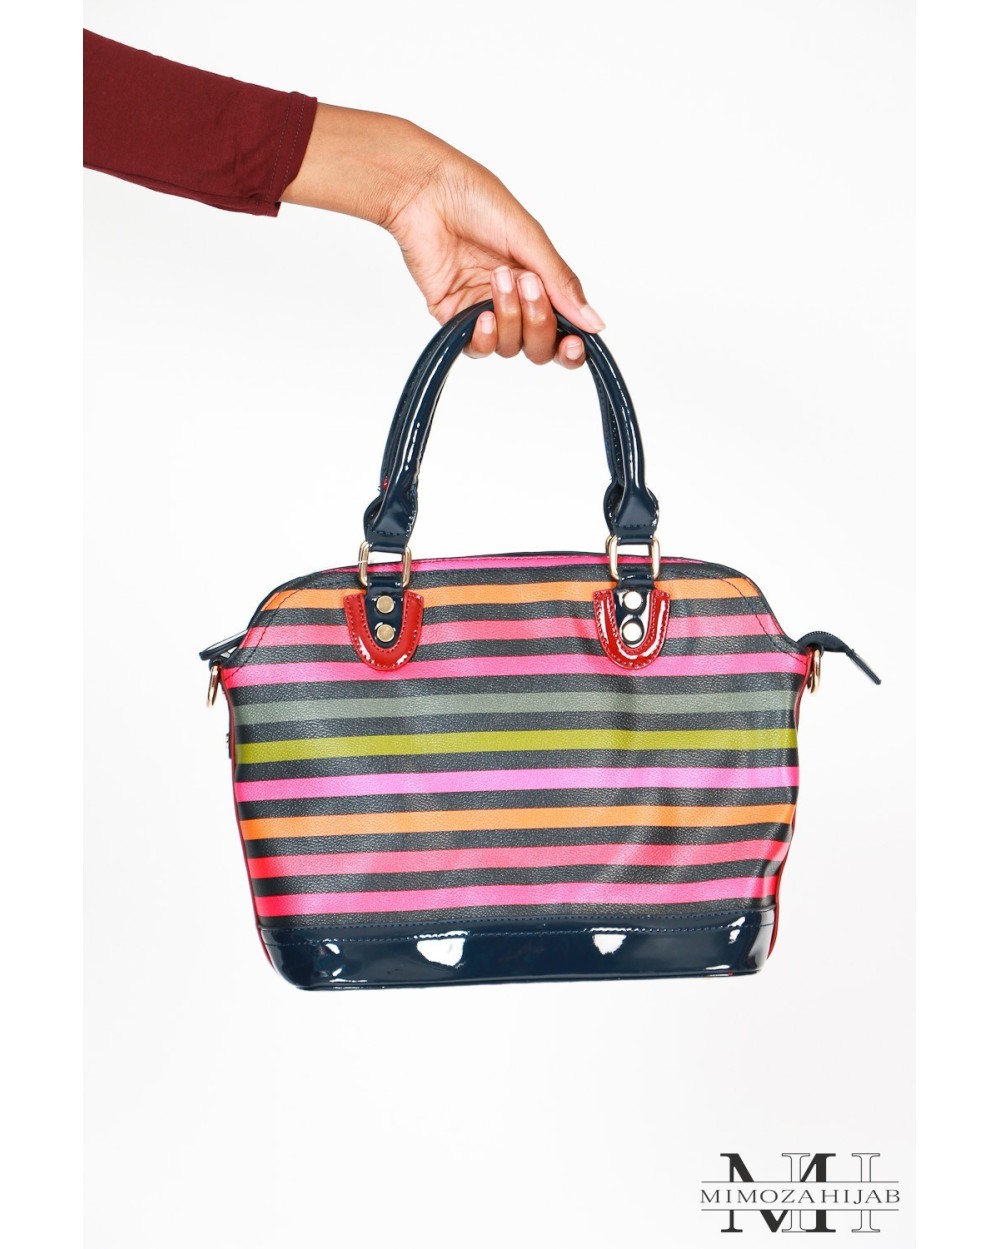 Bag avec Rayures multicolores